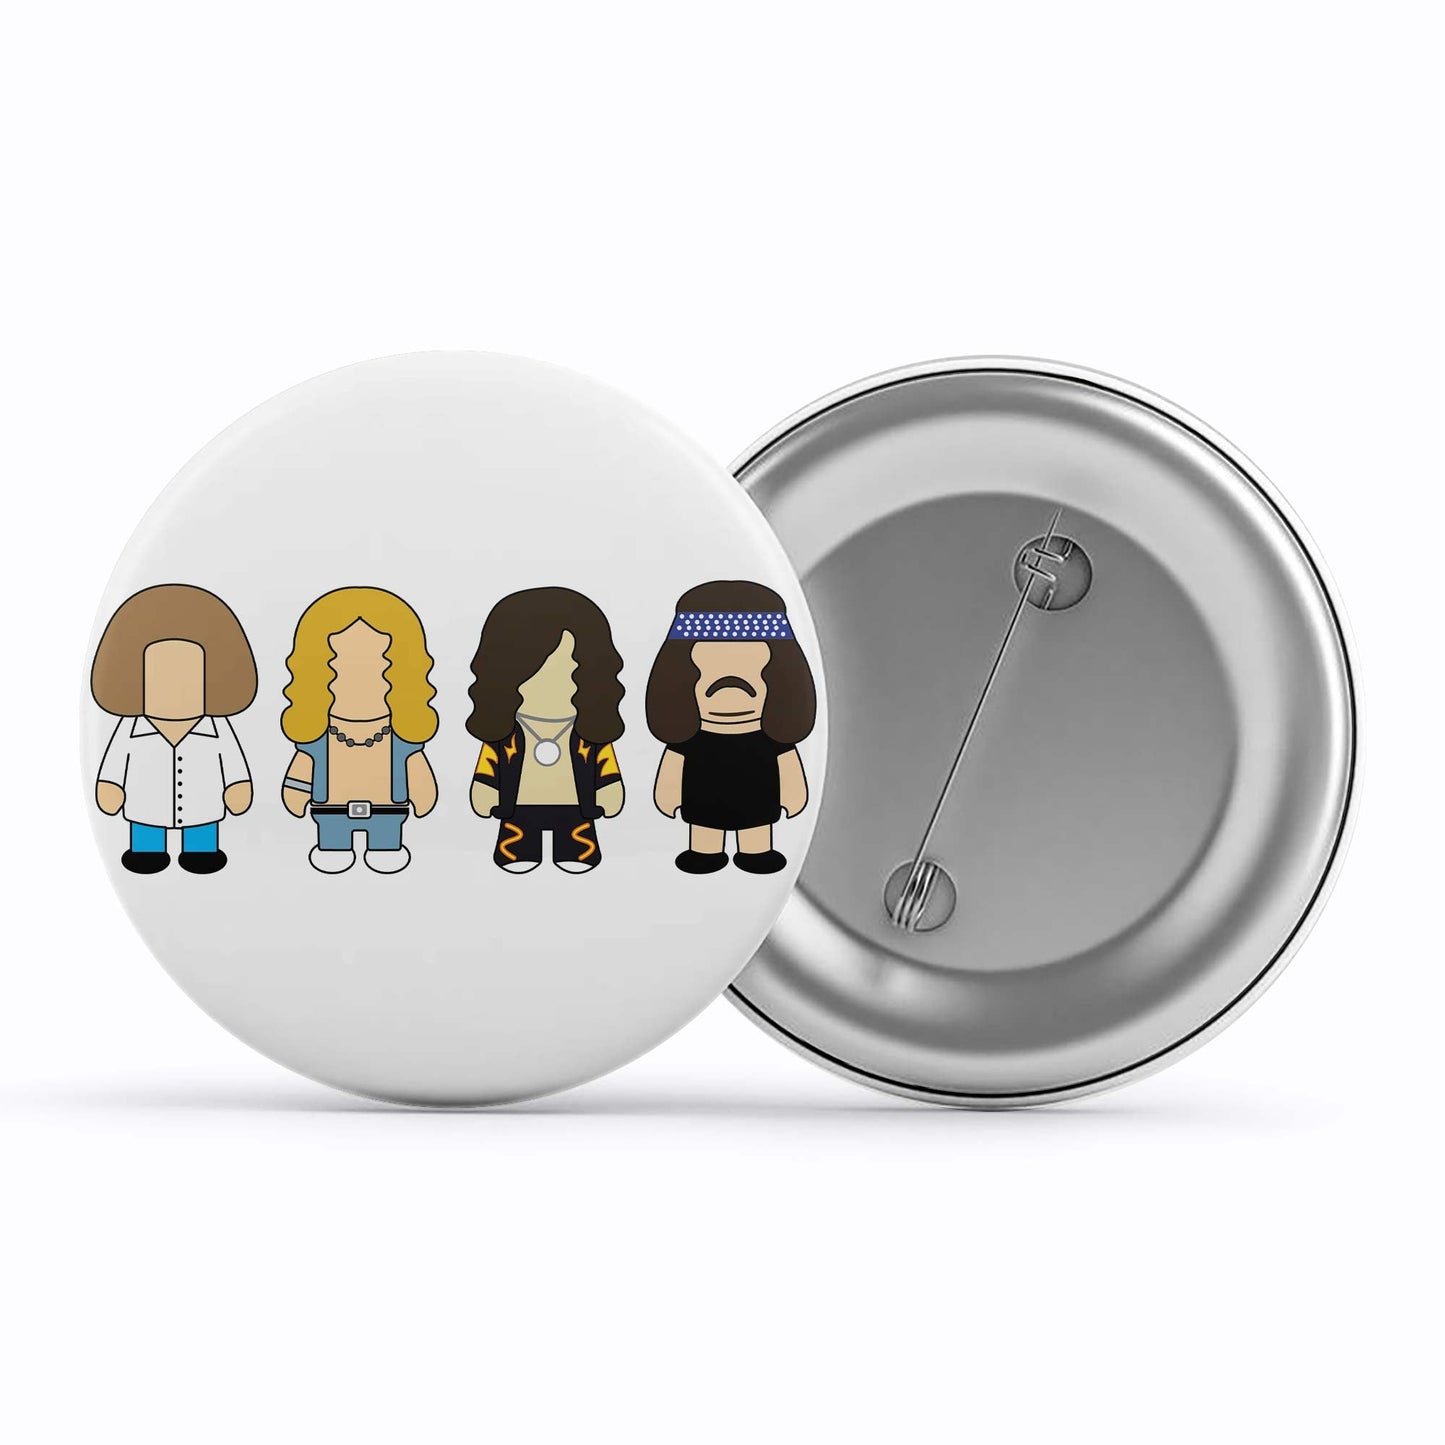 Led Zeppelin Badge Metal Pin Button The Banyan Tee TBT